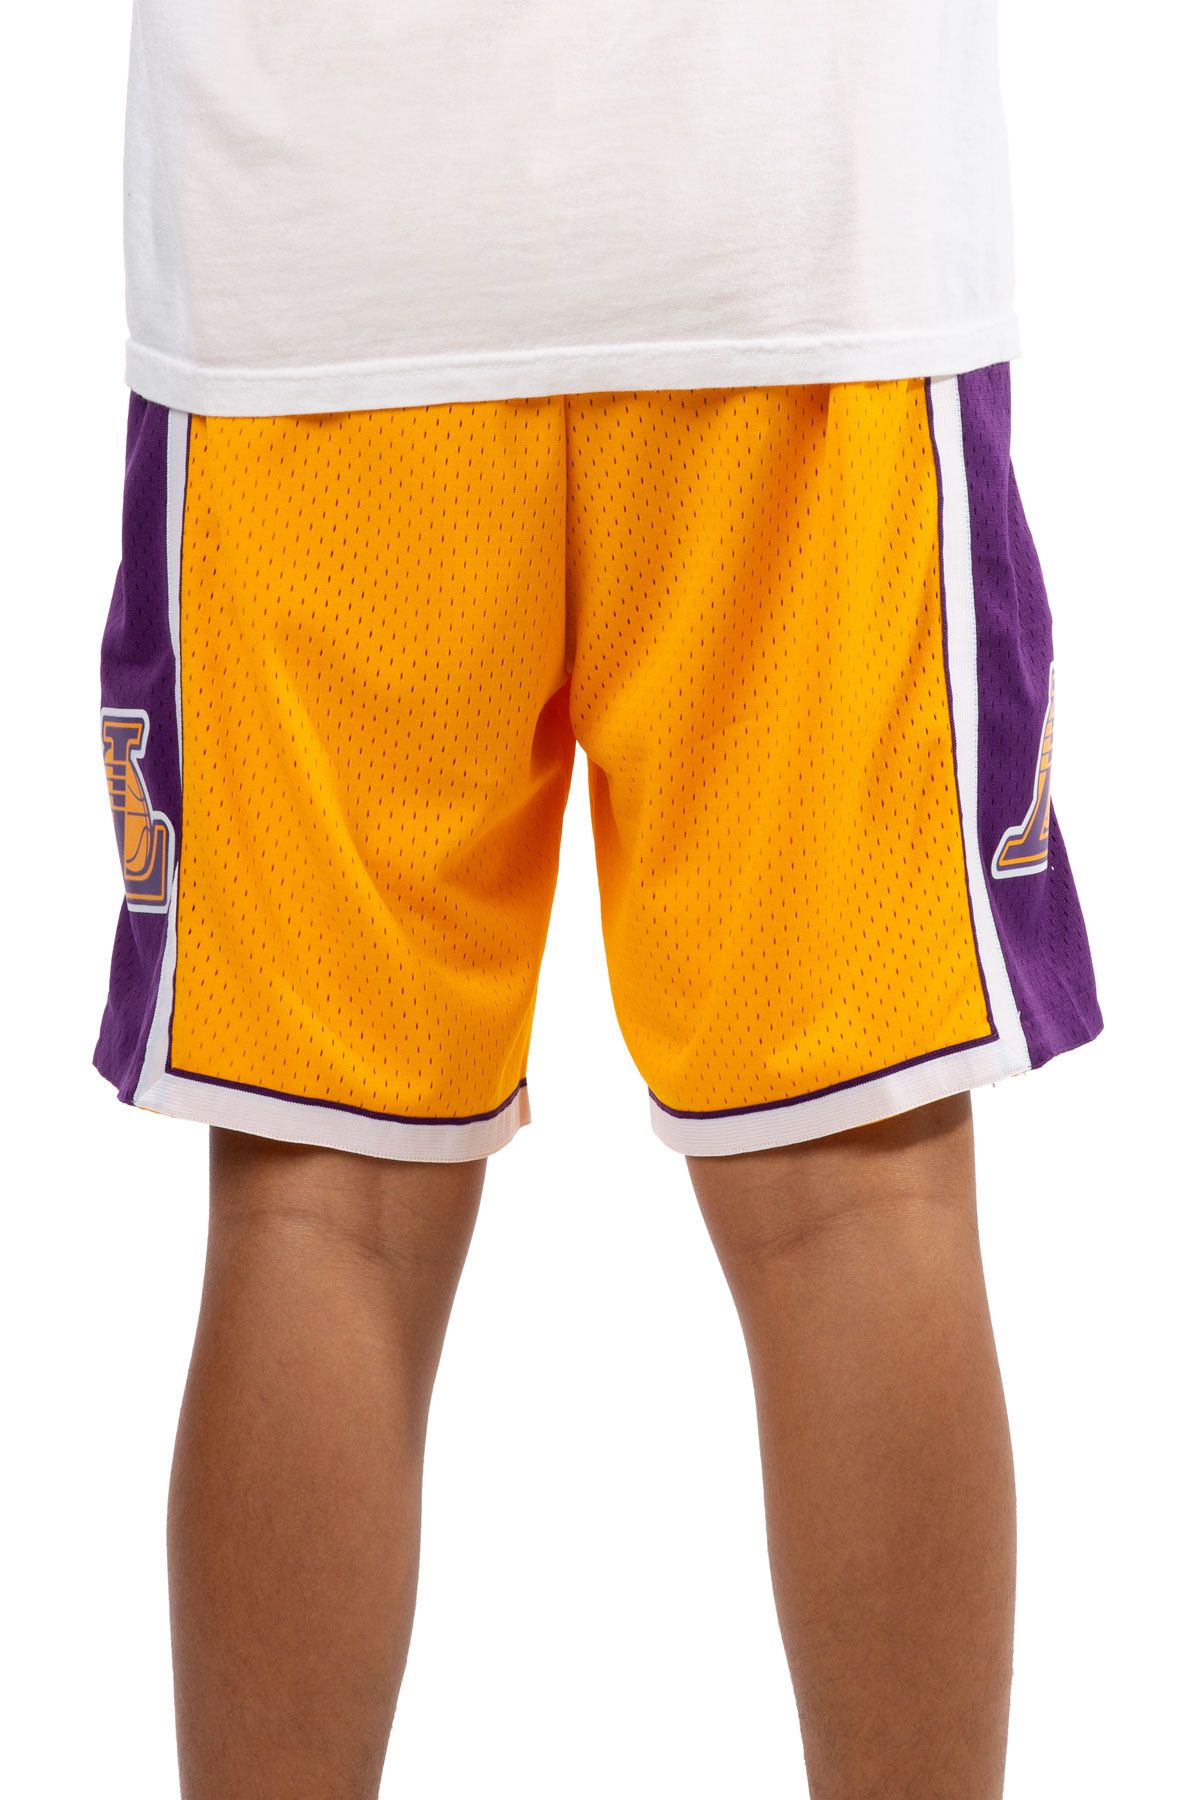 Mitchell & Ness Swingman Shorts Los Angeles Lakers 2009-10 M / Yellow